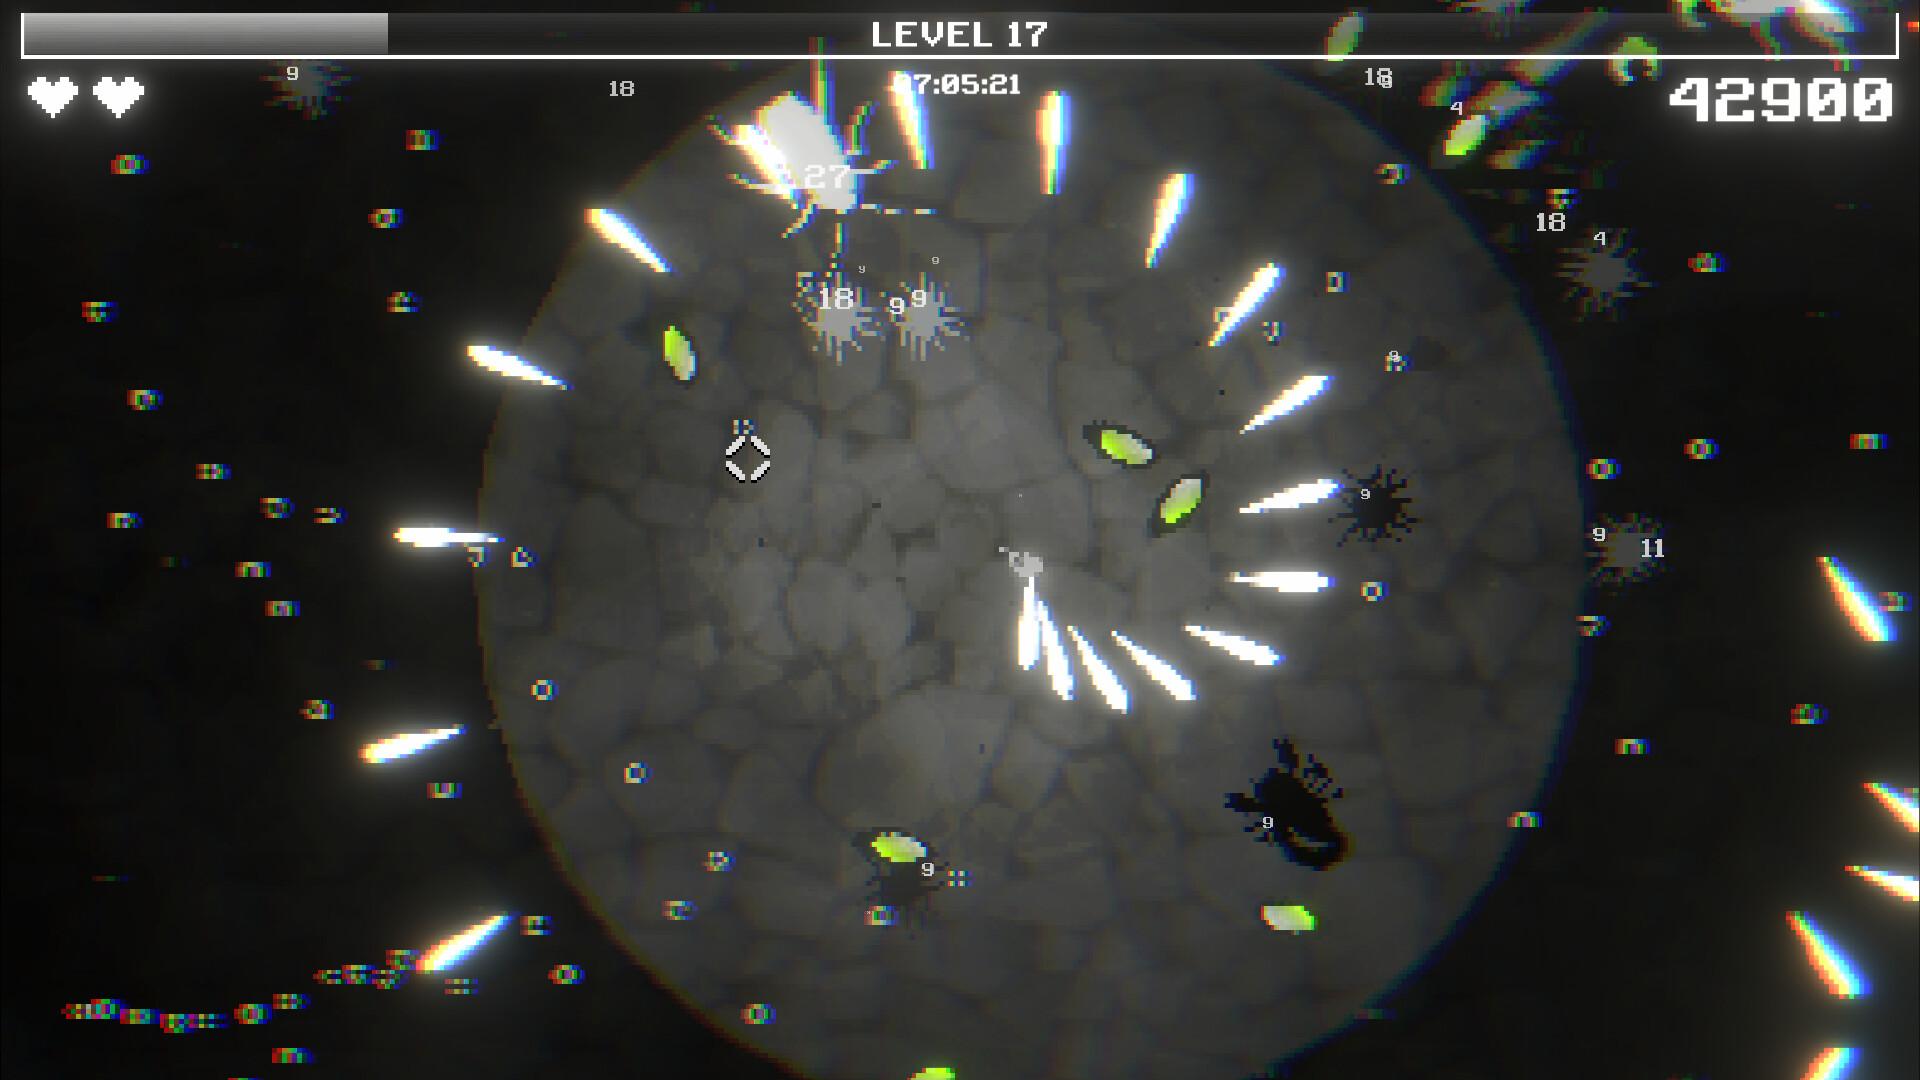 Screenshot №1 from game Disfigure